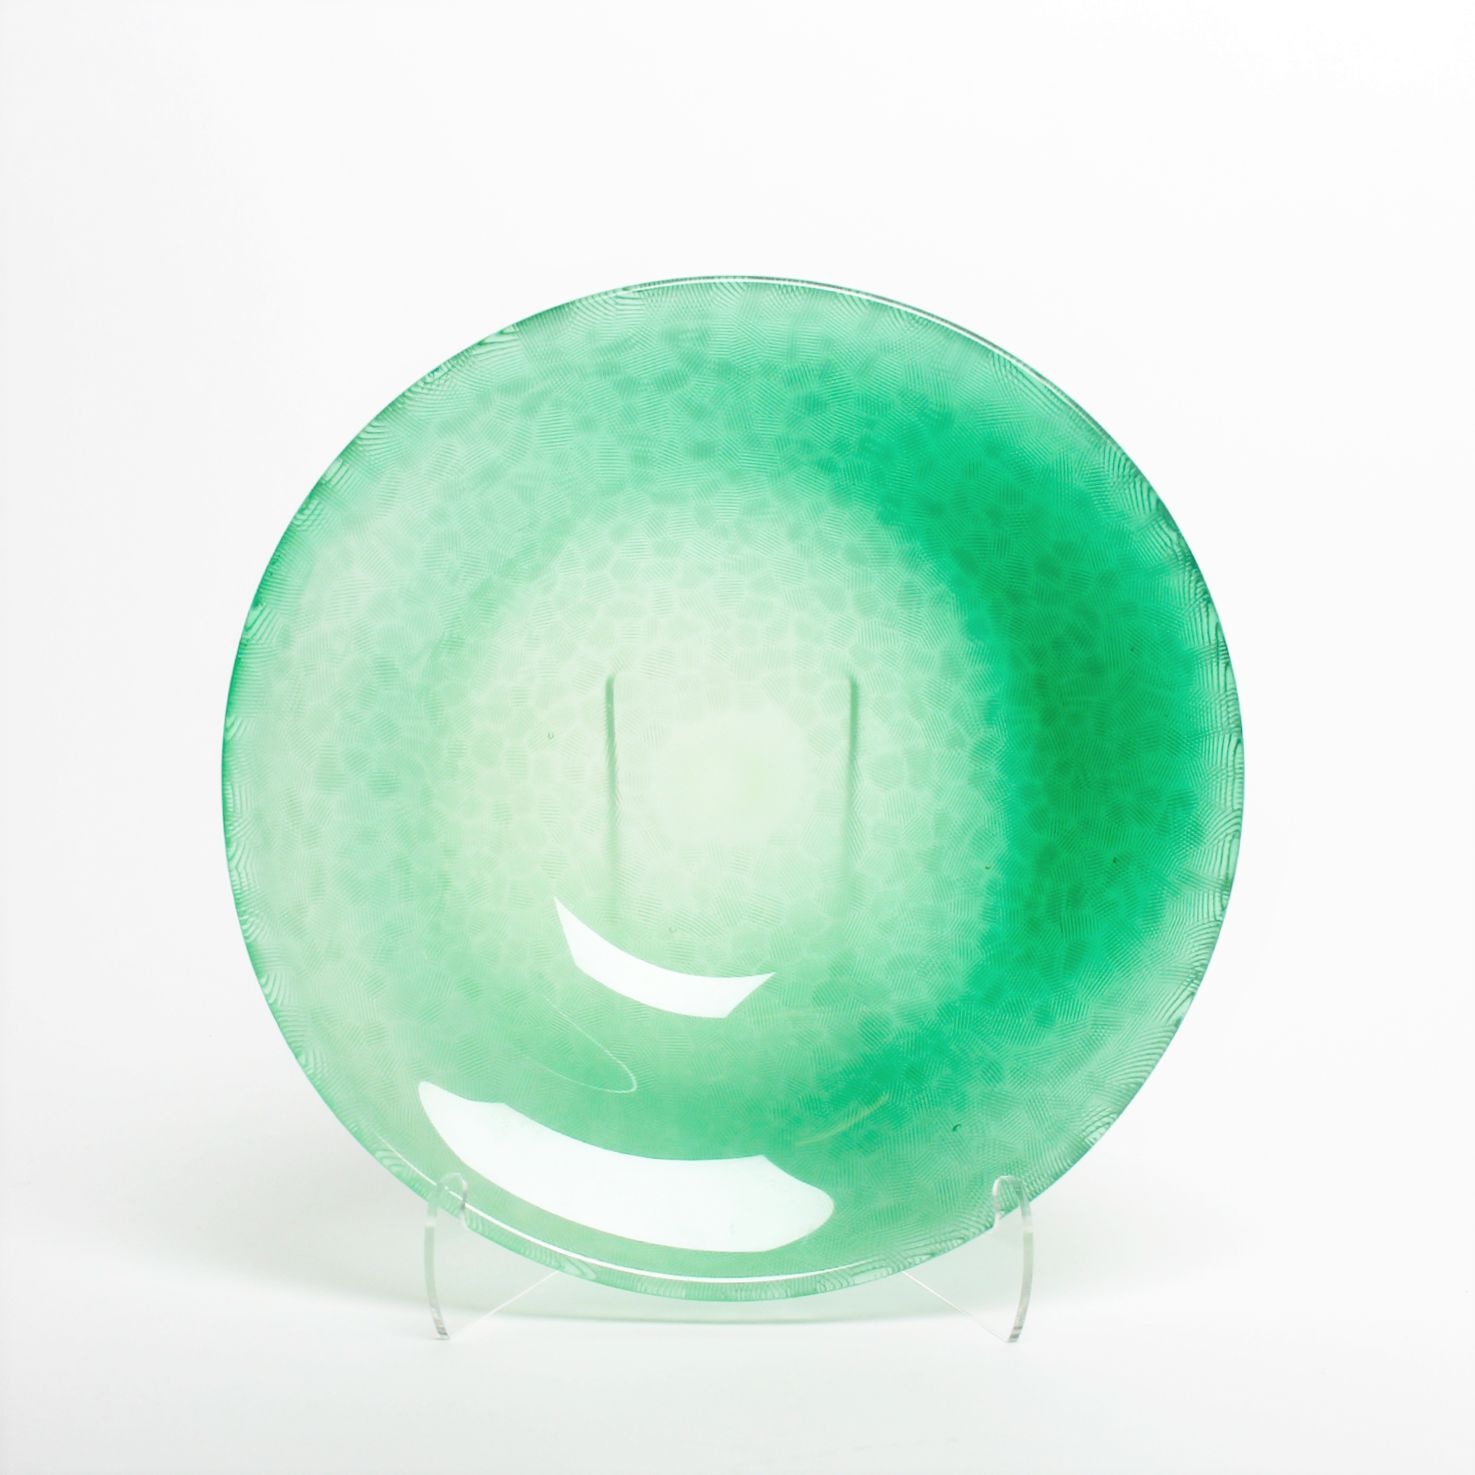 Gordon Boyd: Crosshatch Bowl in Green Product Image 1 of 3